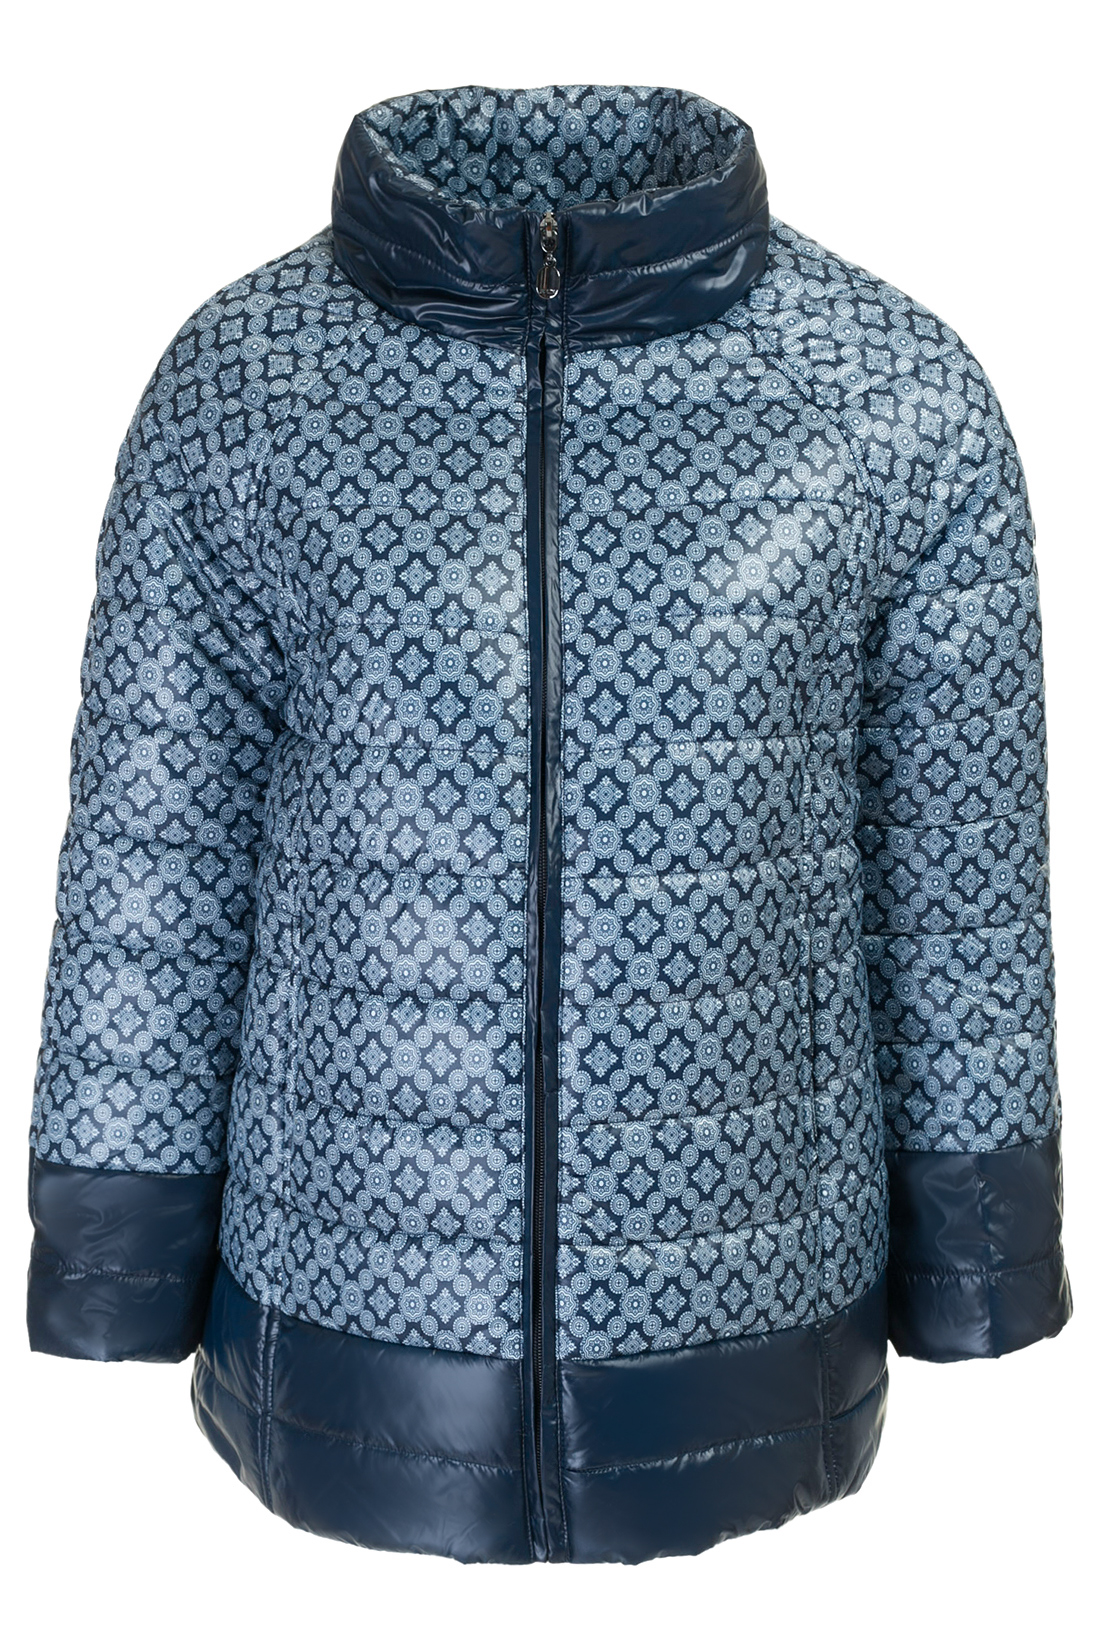 Куртка SIZE+ с орнаментом (арт. baon B037121), размер 56, цвет dark navy printed#синий Куртка SIZE+ с орнаментом (арт. baon B037121) - фото 3